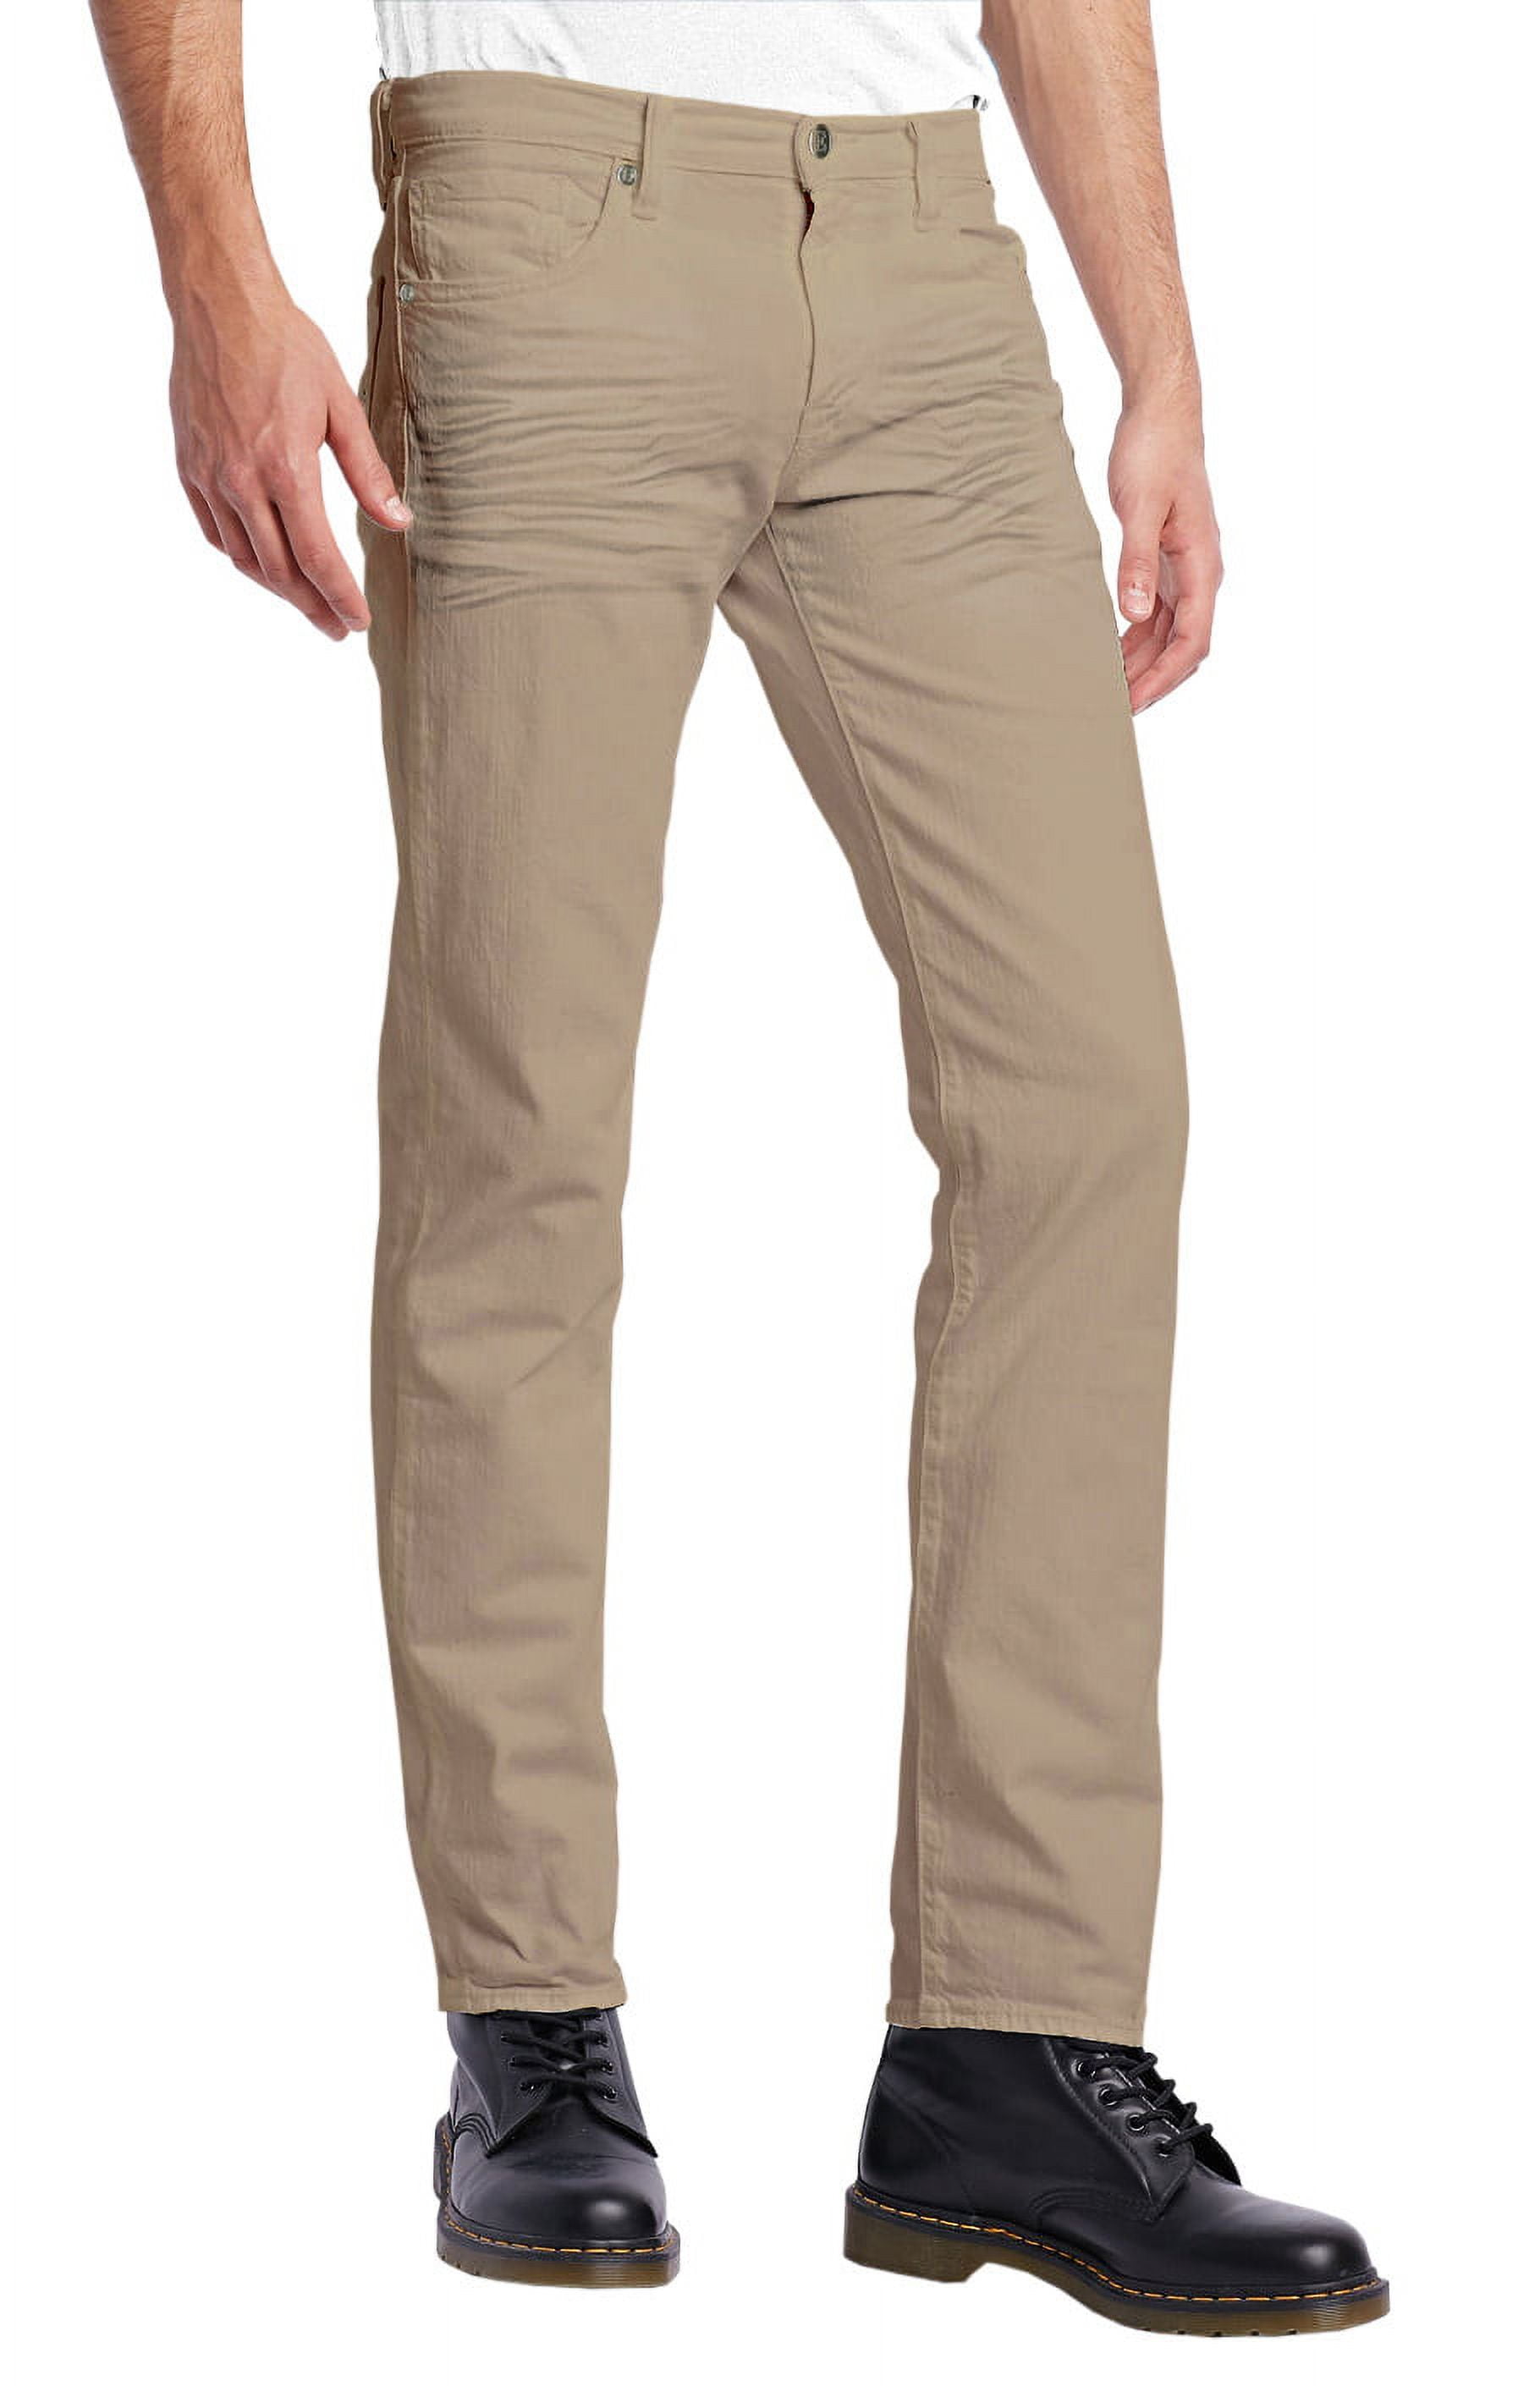 ETHANOL Mens Slim Hyper Stretch Motion Denim Jean with Short and Tall  Inseams - Walmart.com